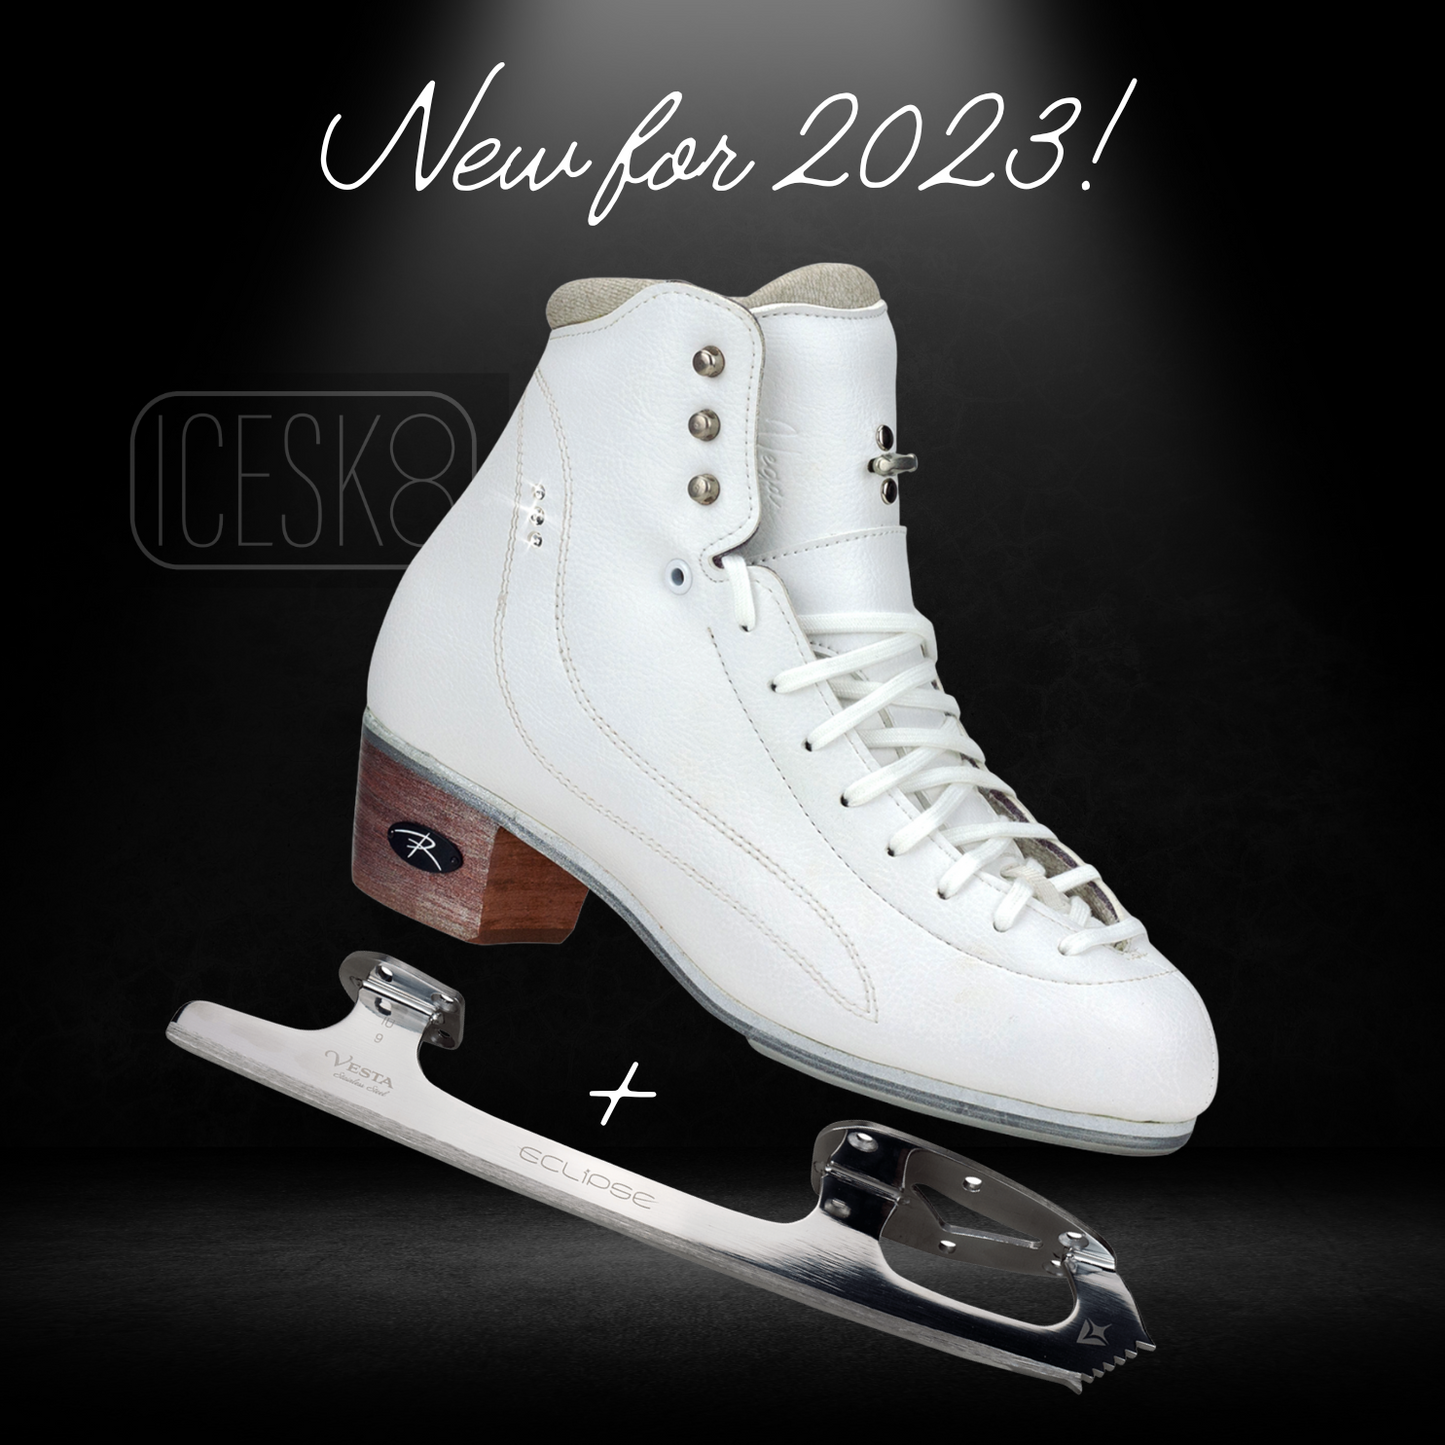 Riedell Vega White Boot Skate Set with Vesta Blades